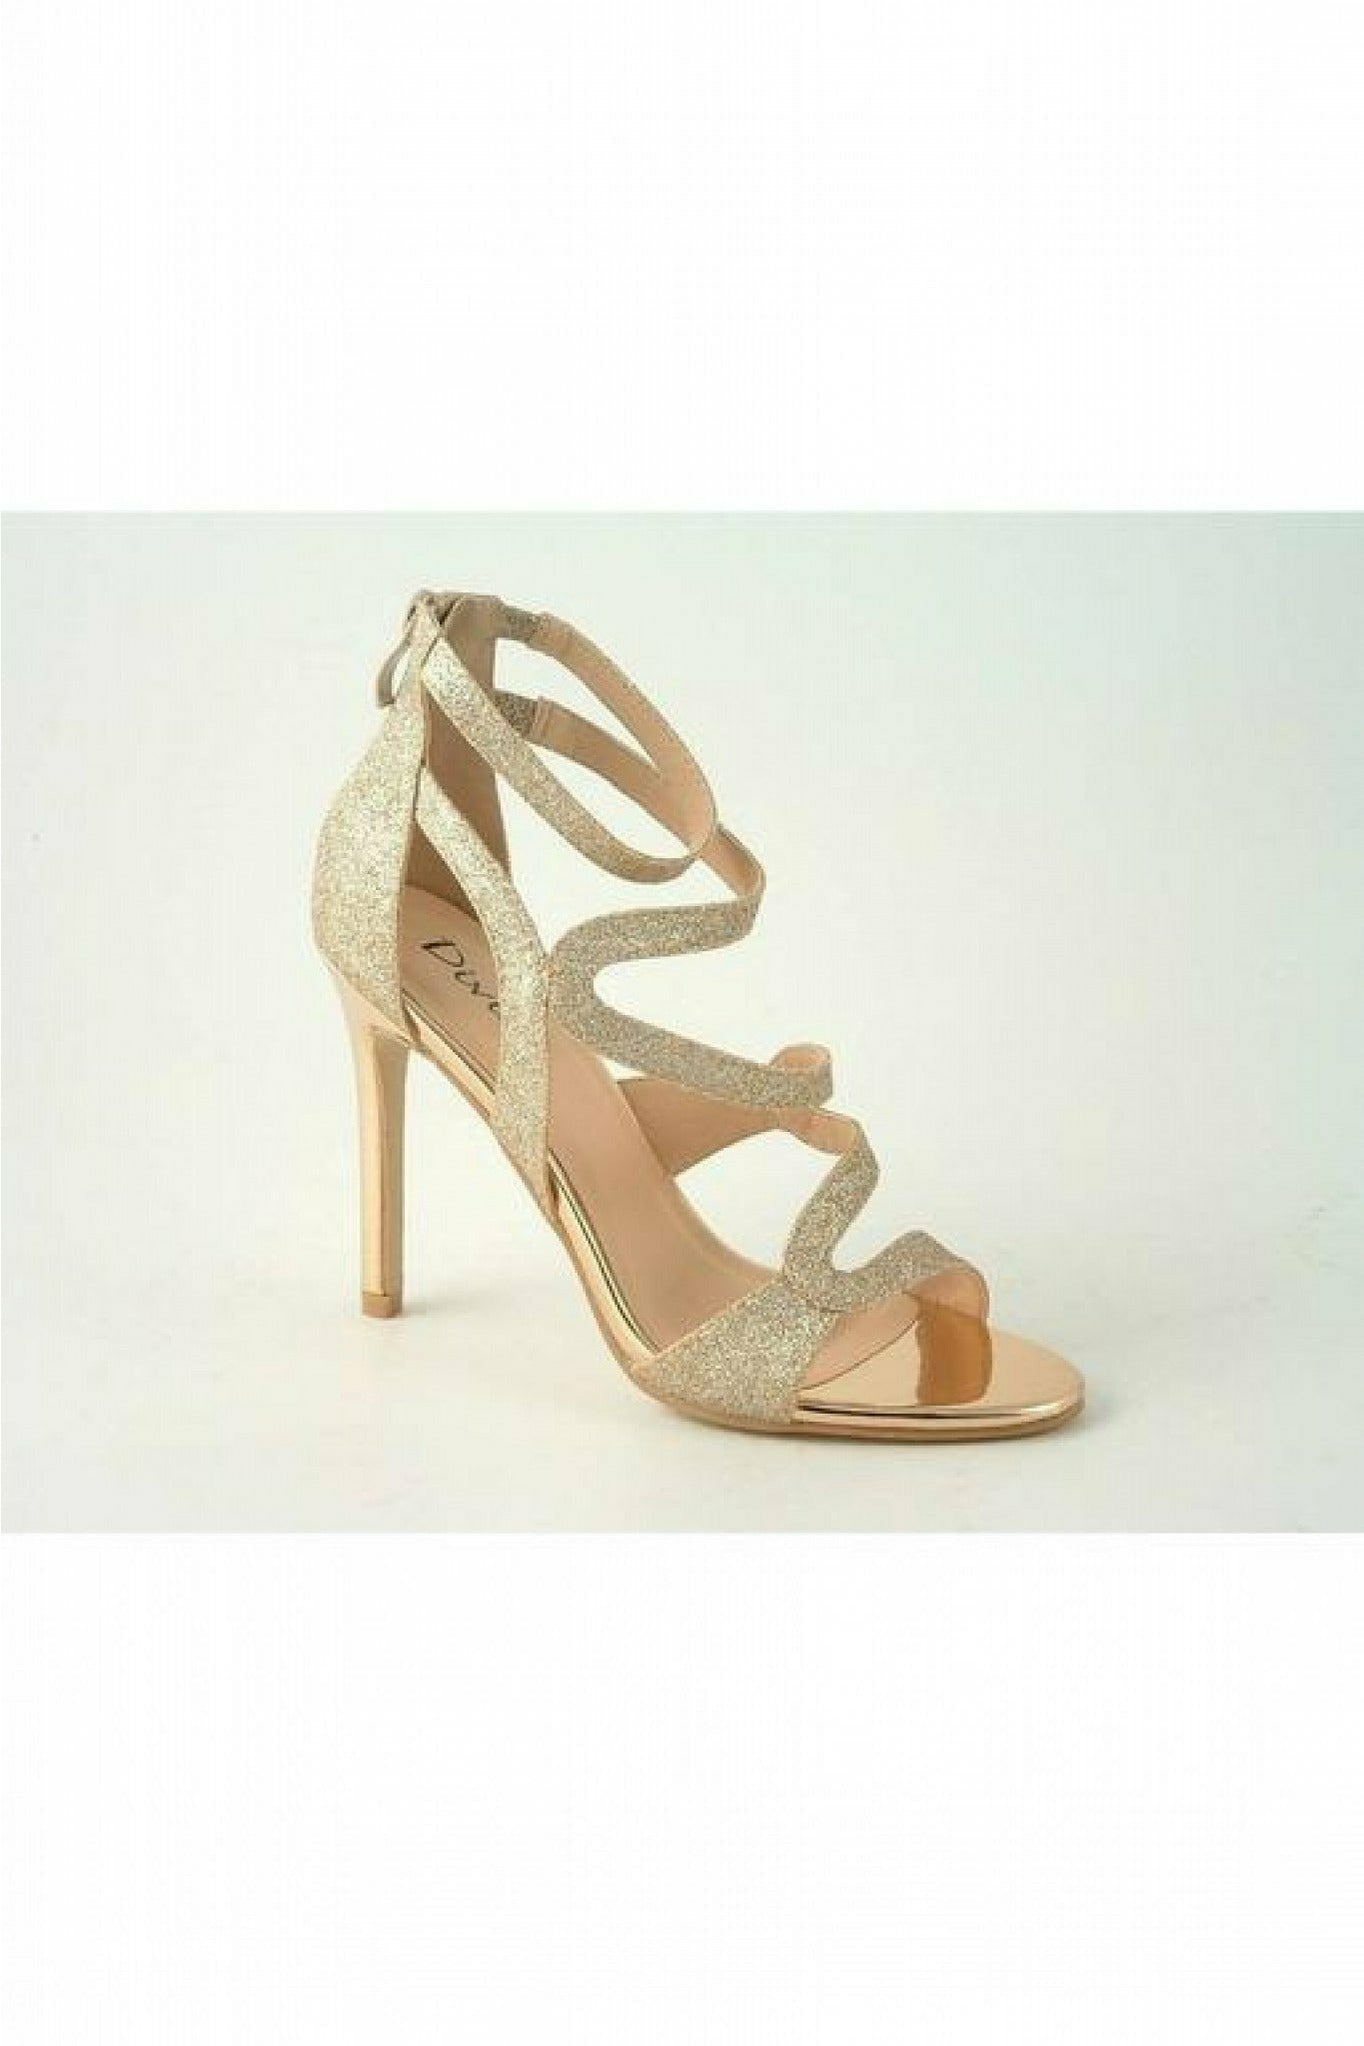 Alisha Divine Glitter High Heel Sandals FT1215